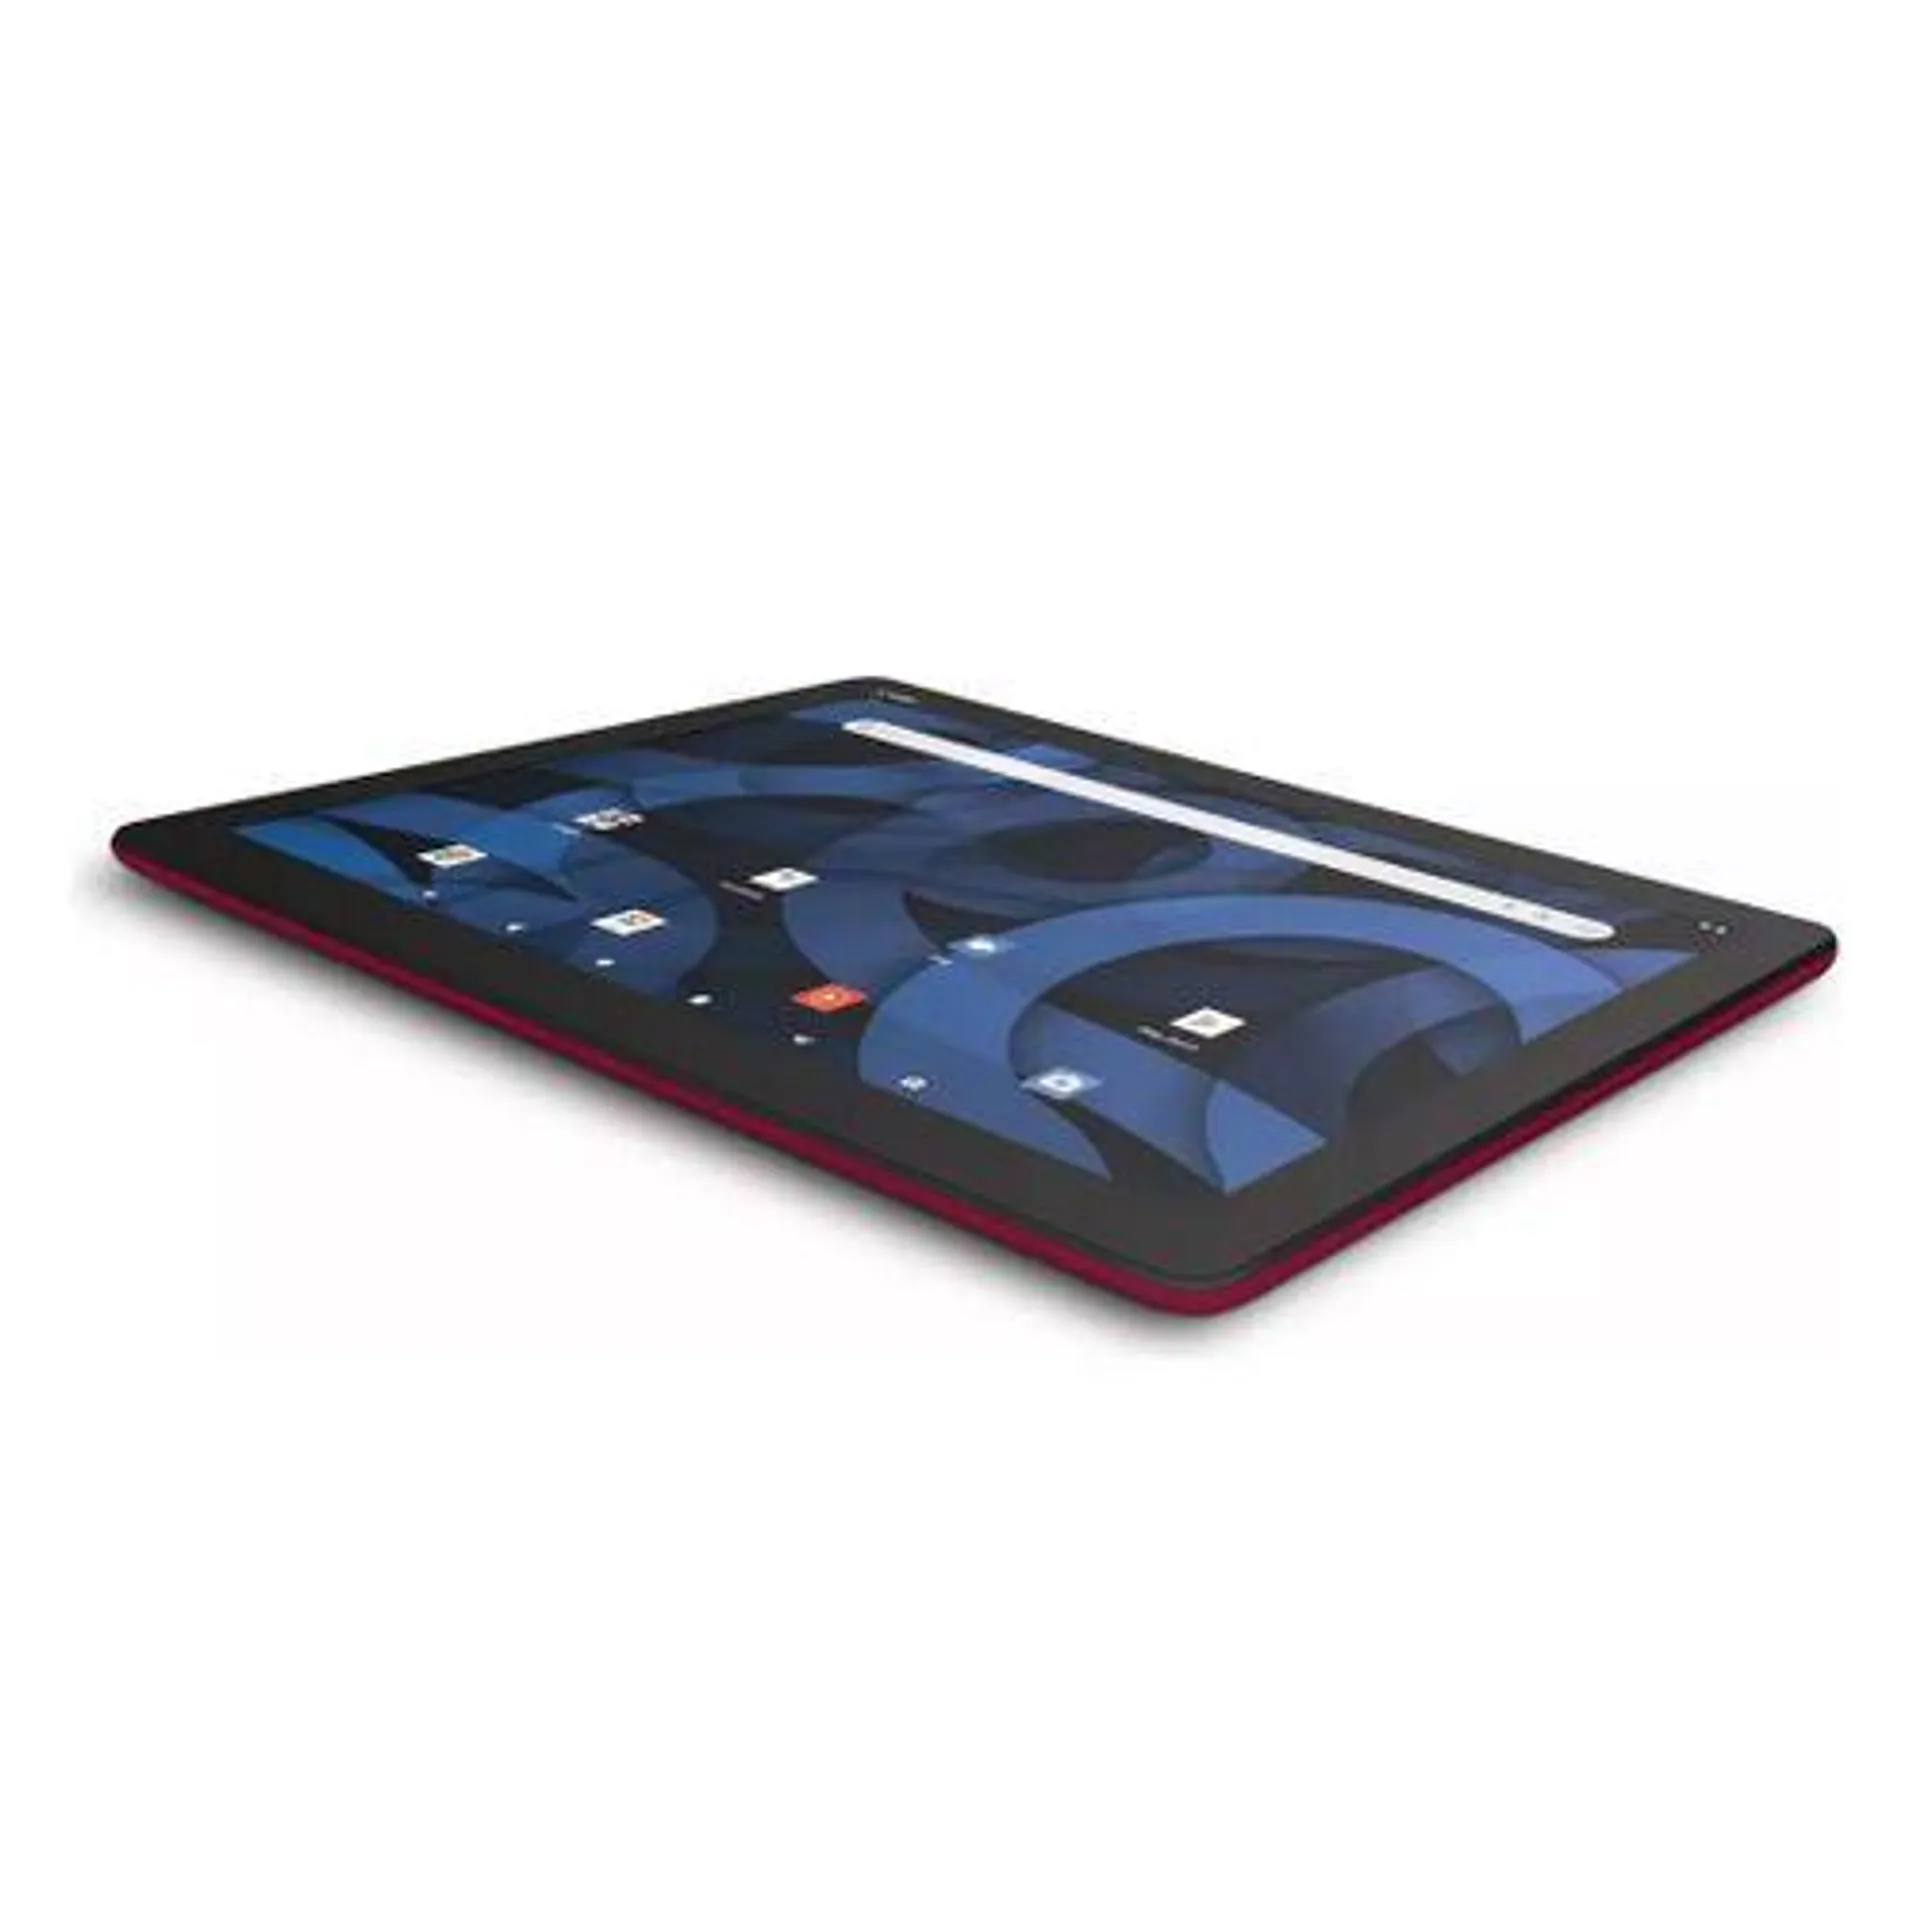 Tablet X-view Quantum Q10 Ips 10 64gb 4gb Ram Android Burgundy